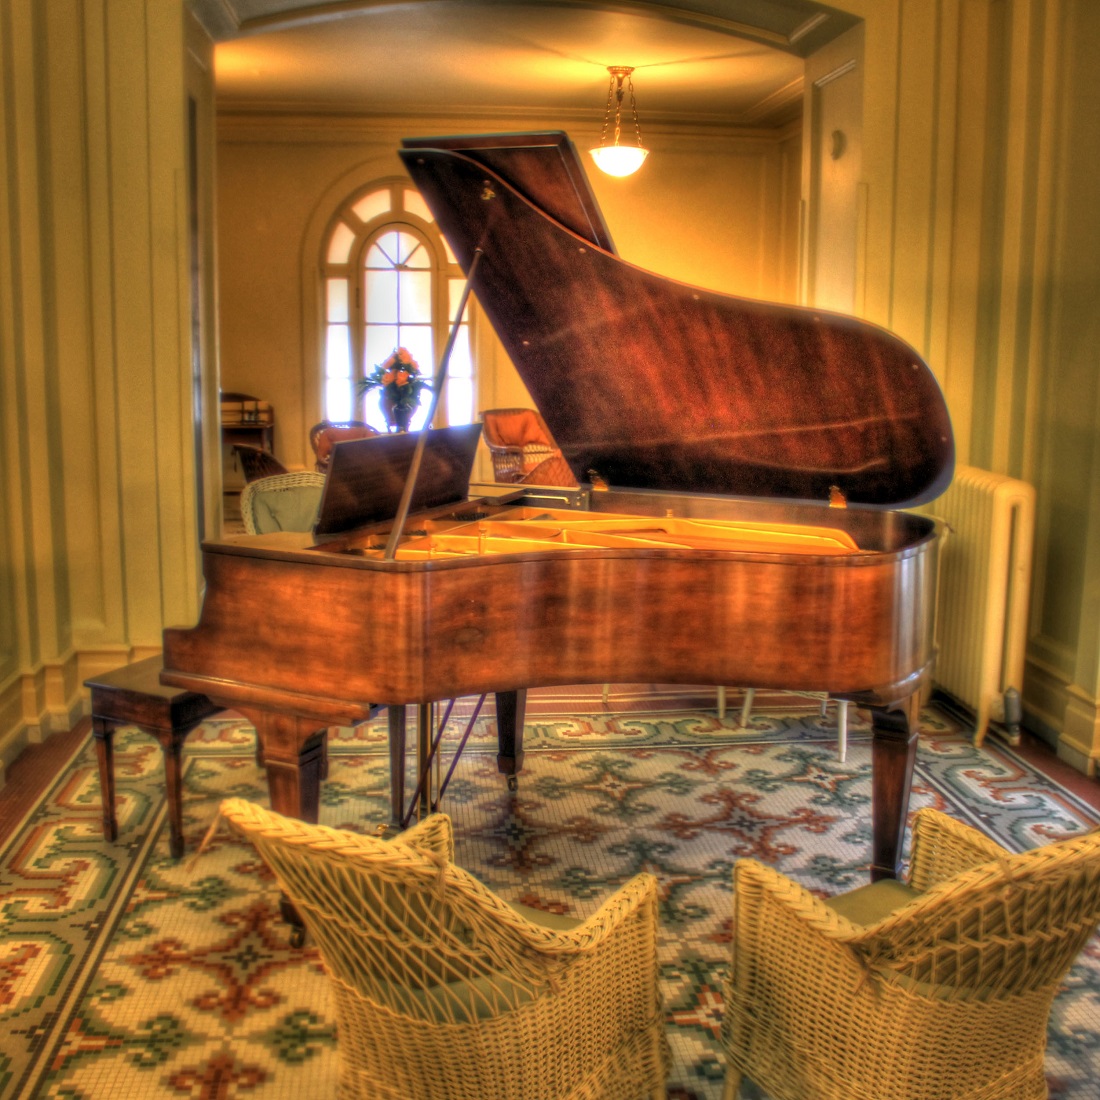 Exclusive piano in parlor room.